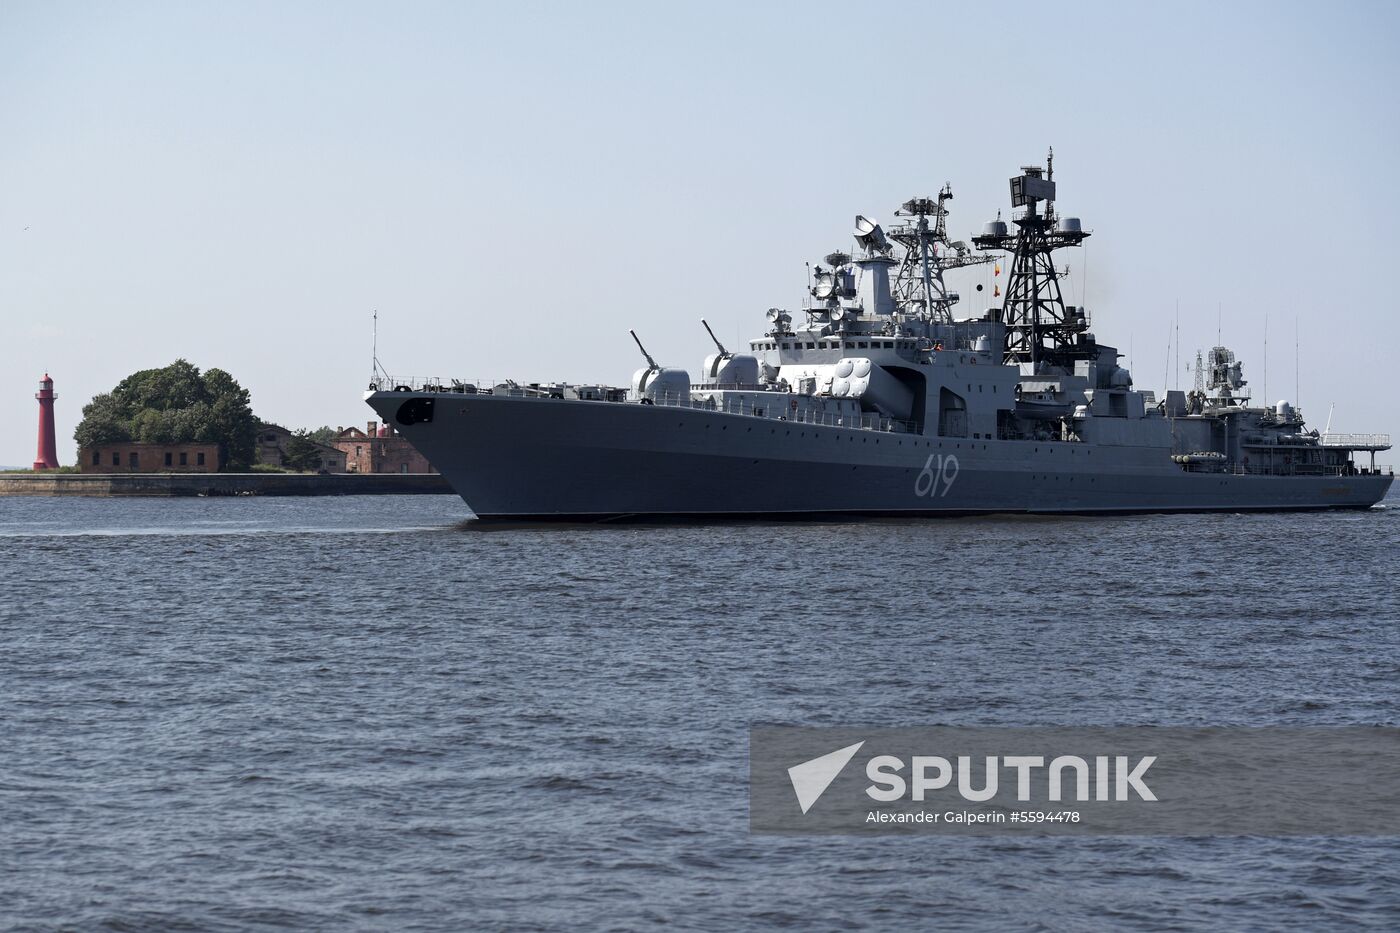 Naval parade rehearsal in Kronstadt